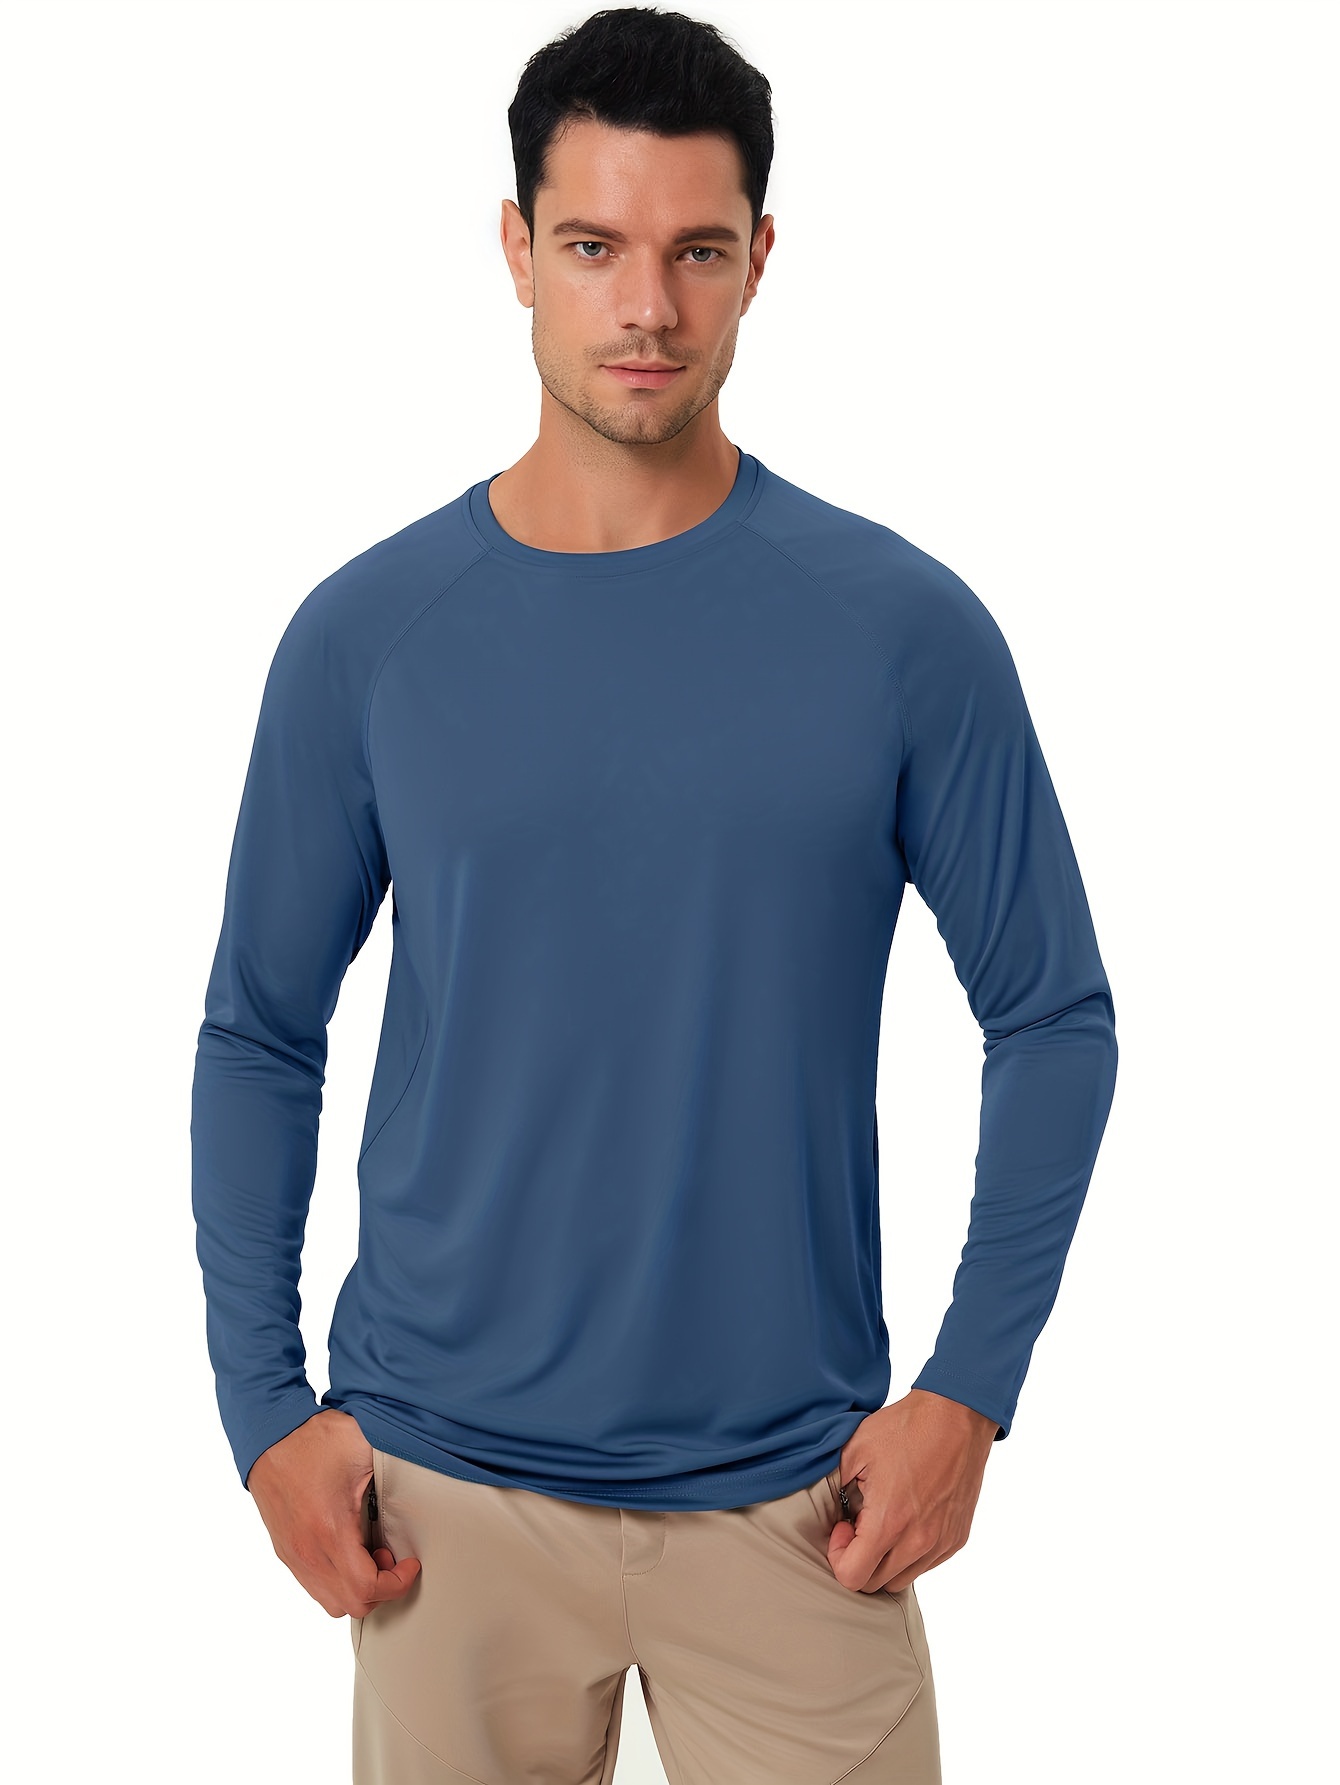 Men's Stretch Quick Dry UPF50+ Long Sleeve Hiking Shirt – Little